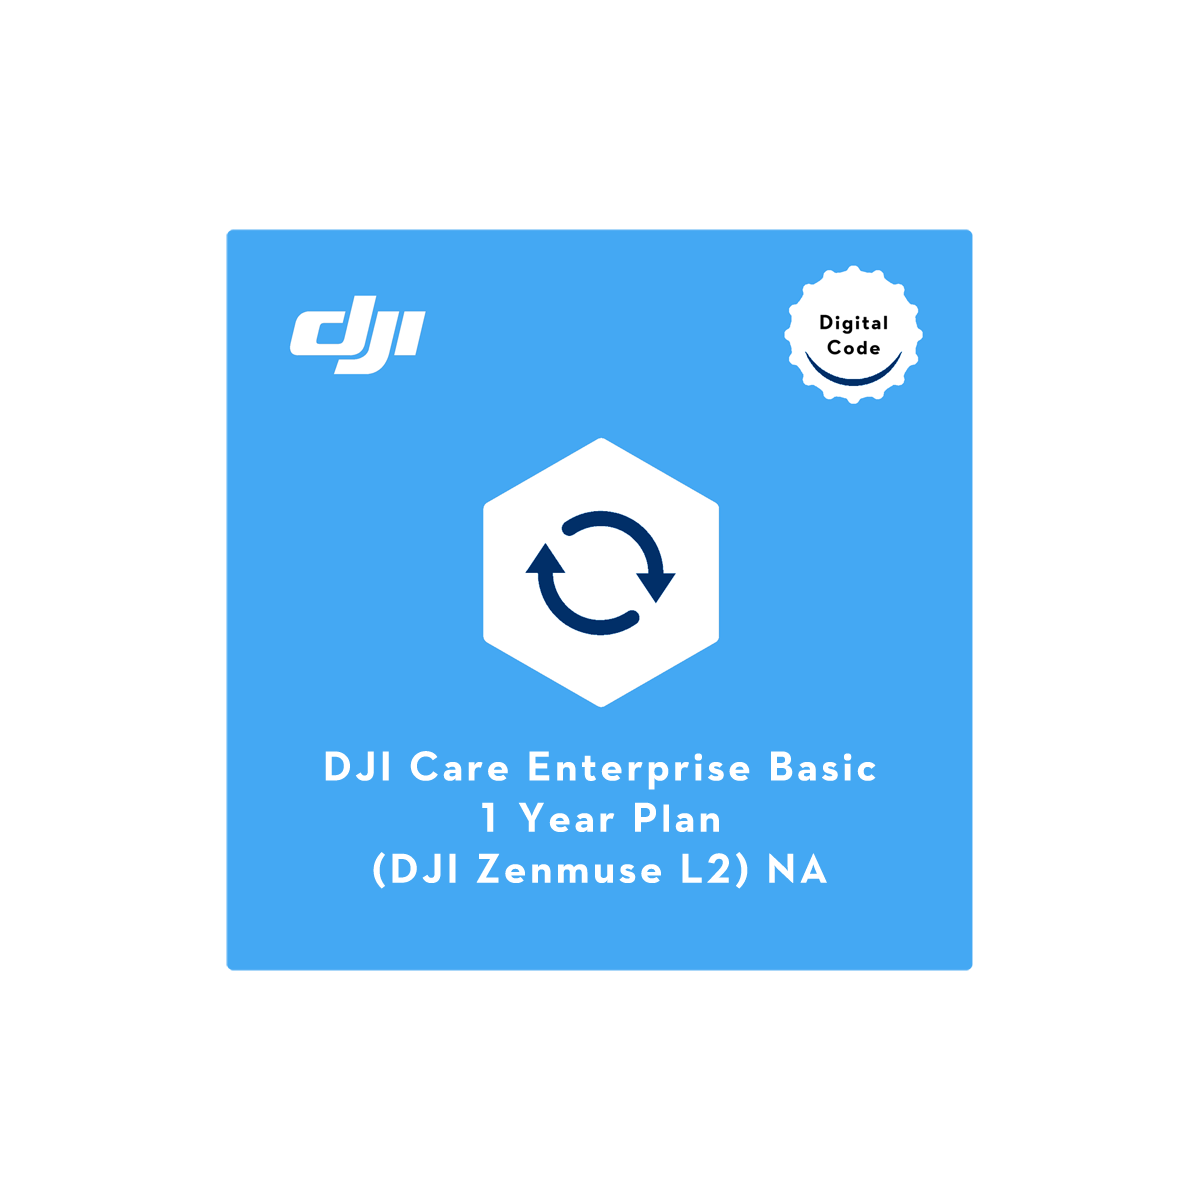 DJI Care Enterprise Basic (L2) NA